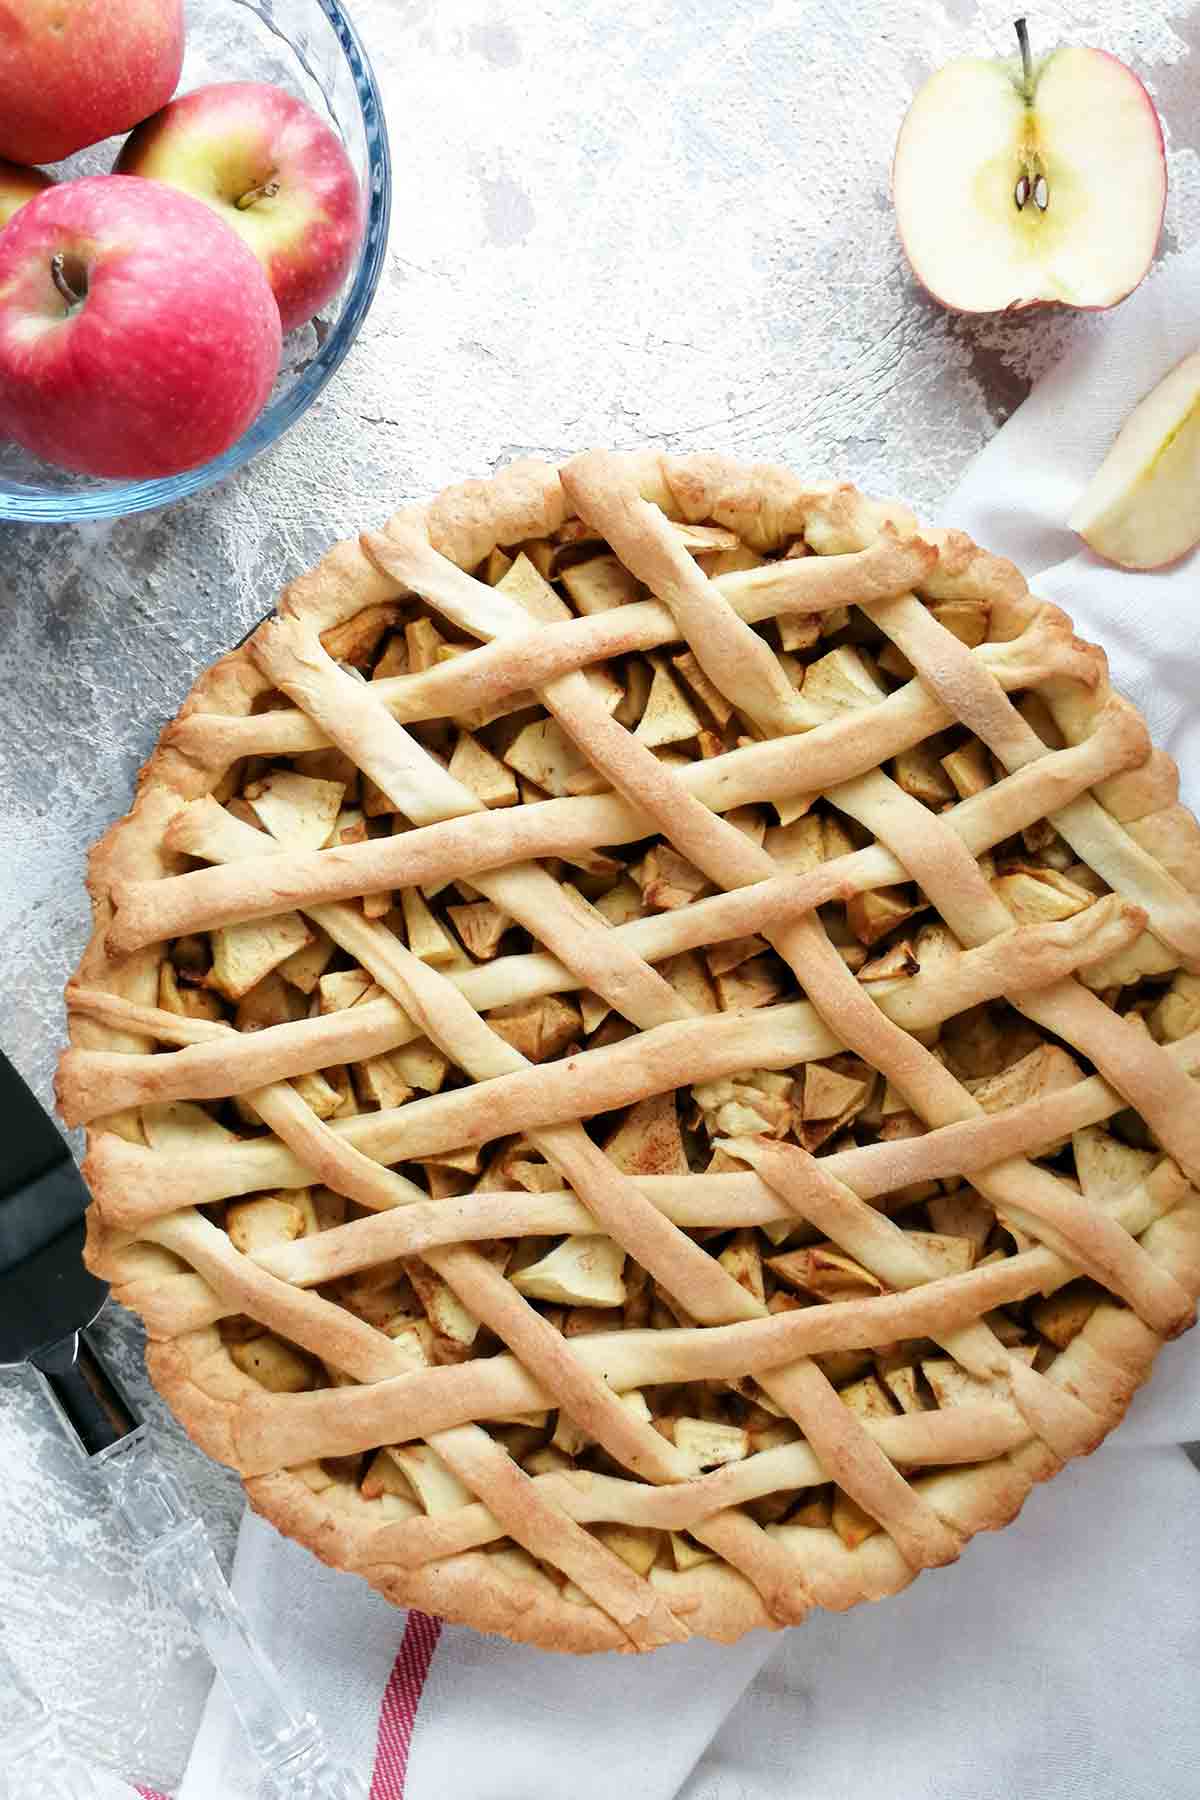 Apple Pie With Lattice Pattern On Top